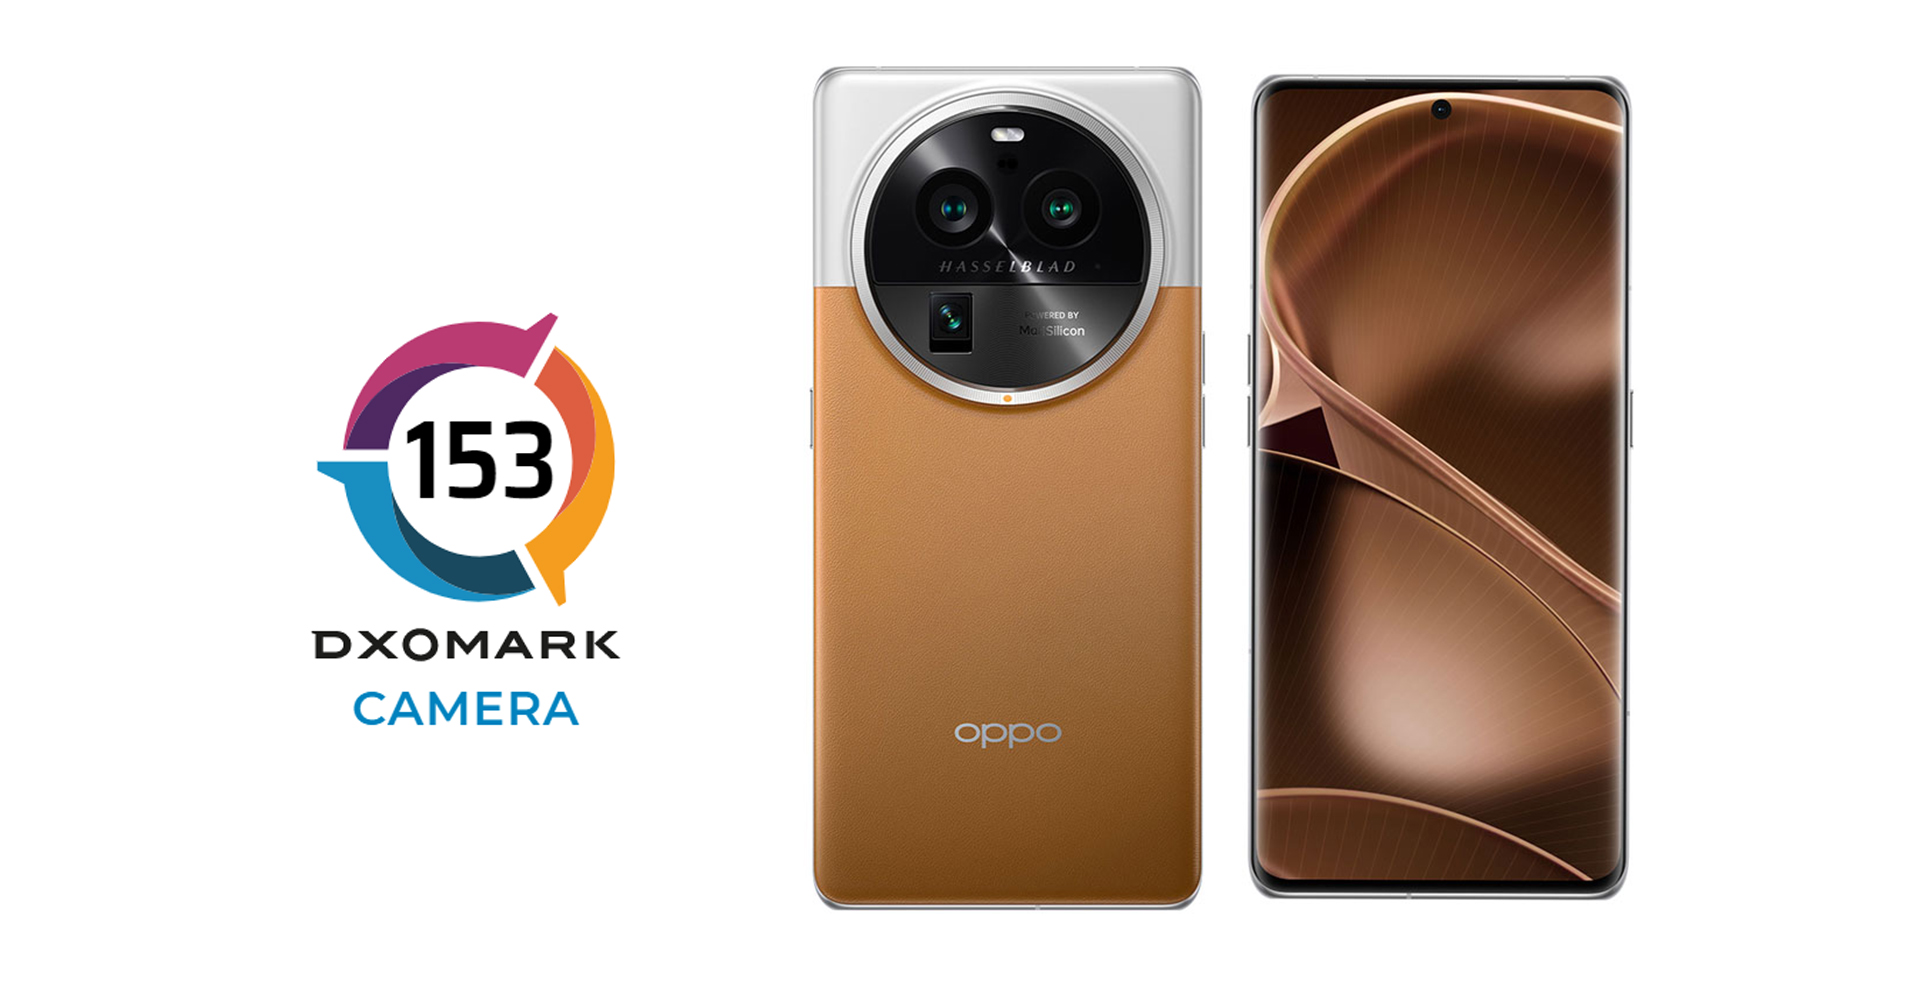 DxOMark เผย OPPO Find X6 Pro ทำไป 153 คะแนน ขึ้นแท่นกล้องสมาร์ตโฟนอันดับที่ 1 ของโลก